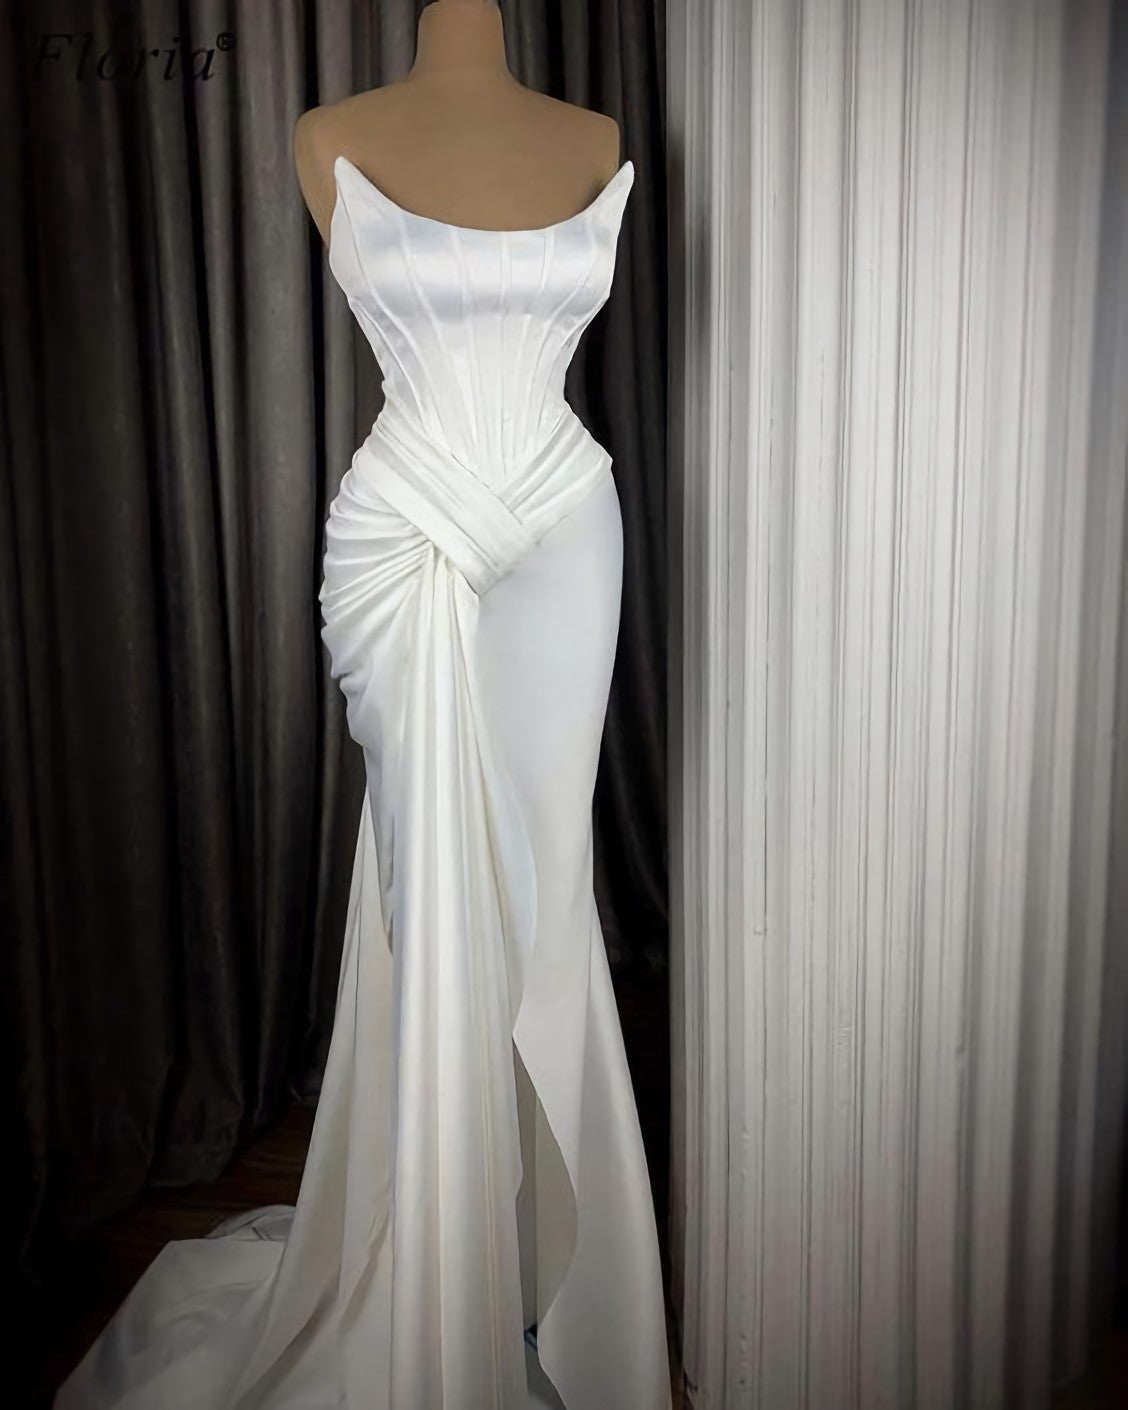 White Elegant Evening Dresses, Long Corset Formal Celebrity Dresses, Evening Wear Corset Prom Dresses outfit, Homecoming Dress Simple